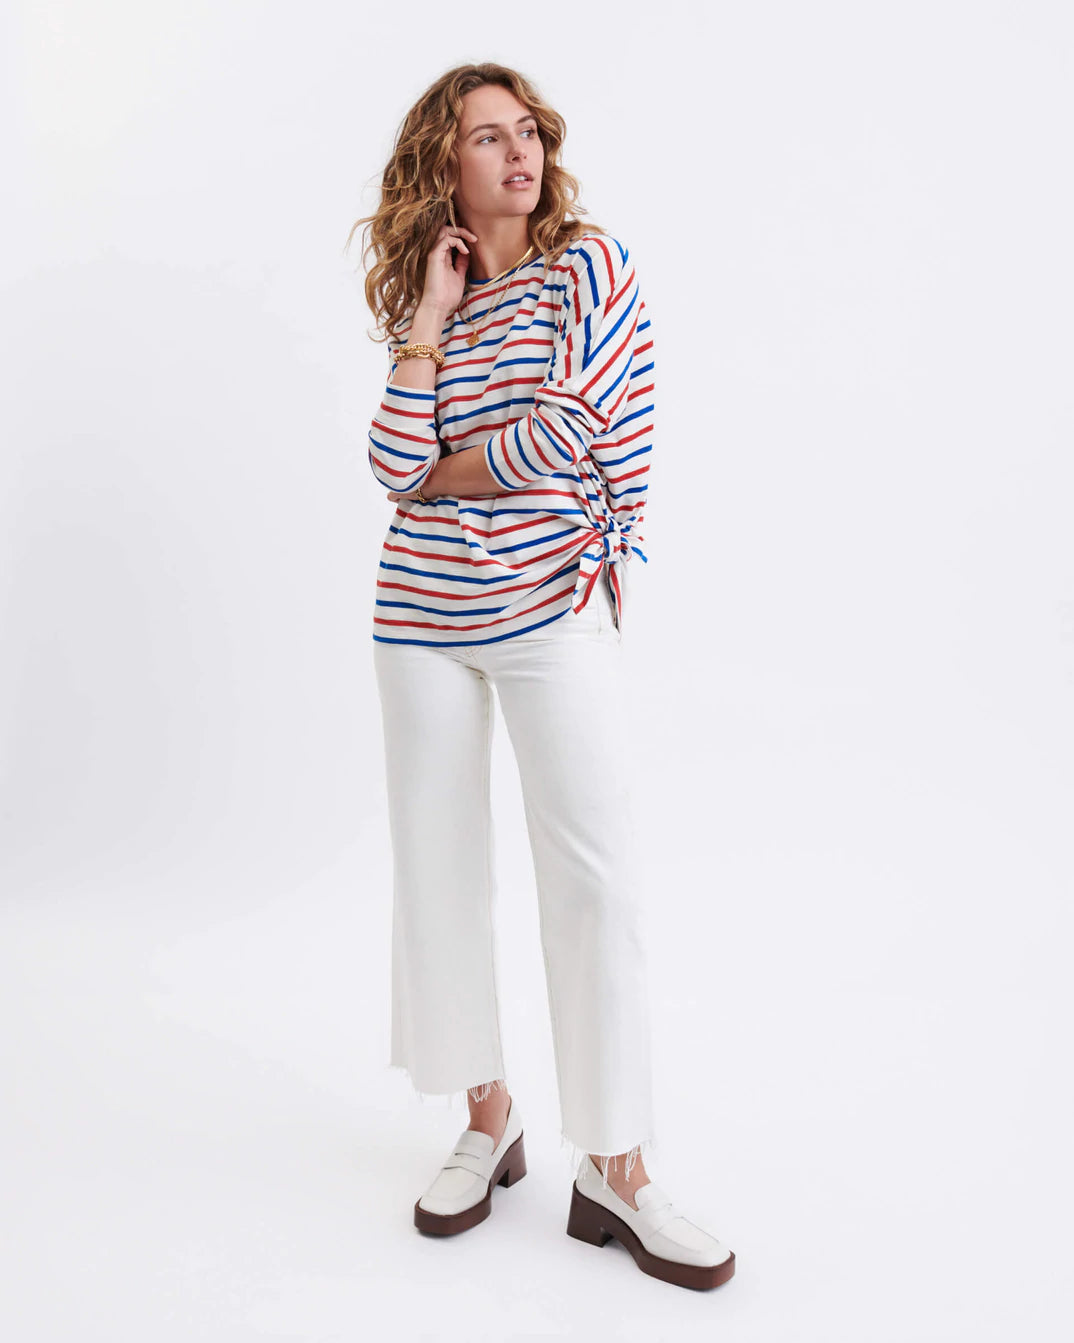 Catalina Slub Tee - Red, White, and Blue Stripes